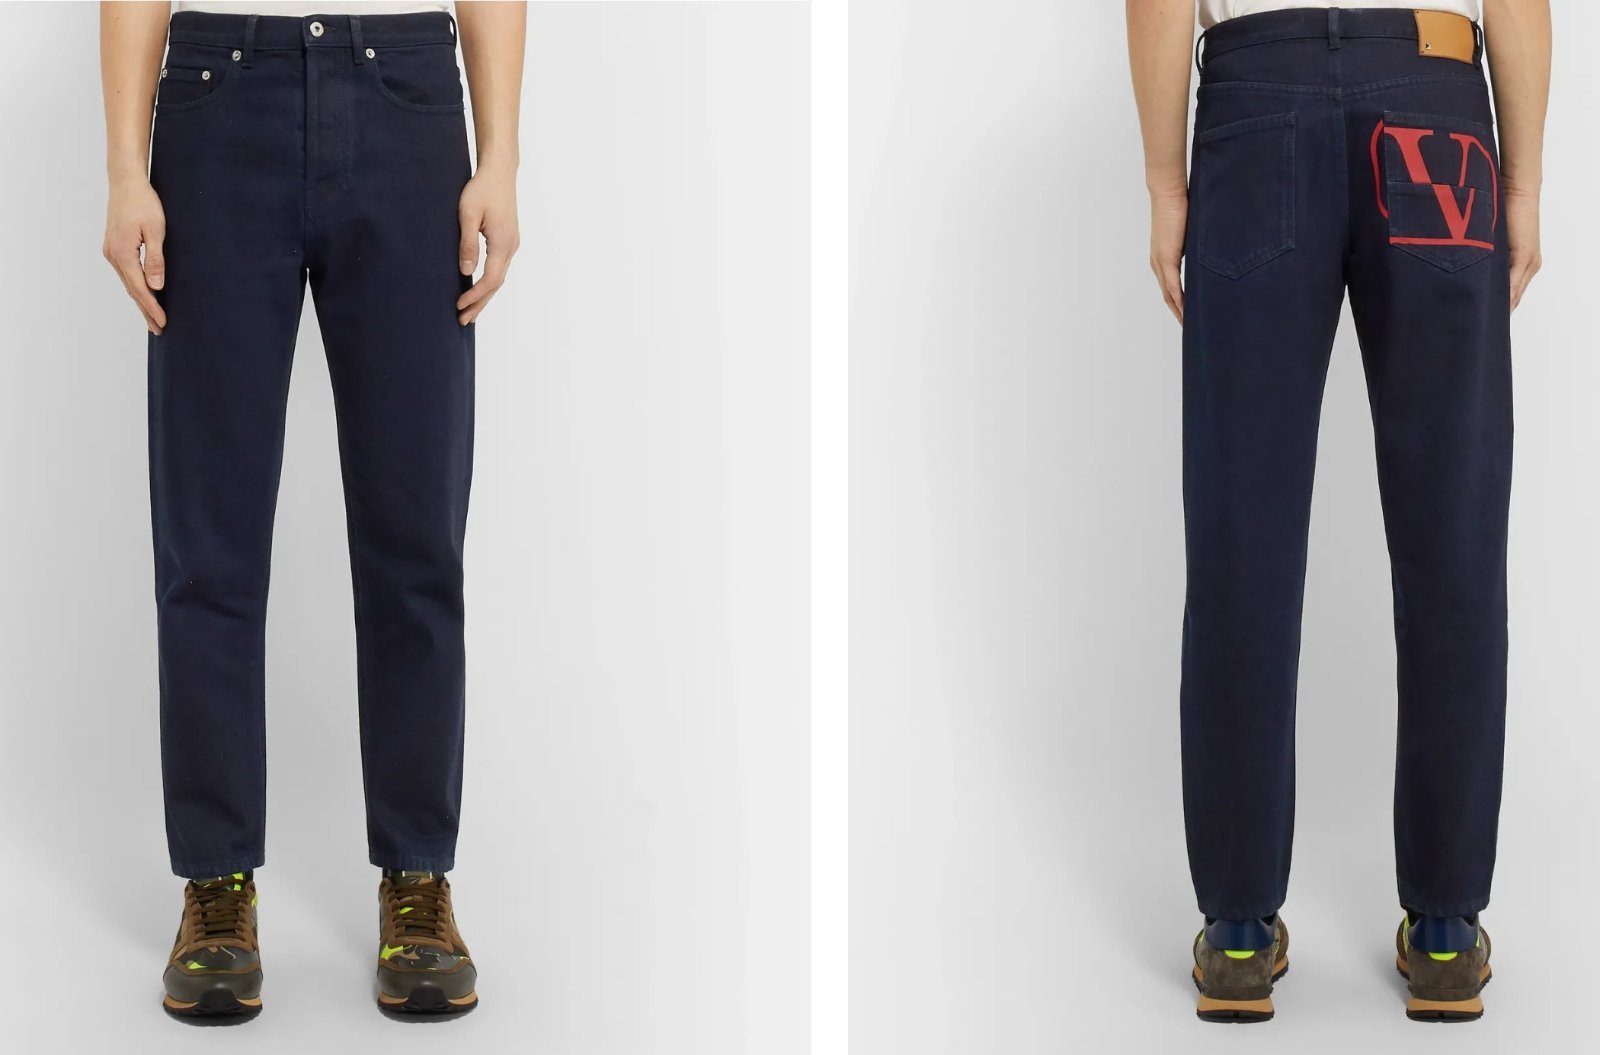 Valentino 5-Pocket-Jeans VALENTINO MENS ICONIC LOGO JEANS HOSE DENIM PANTS 5 POCKET ICON TROUSE